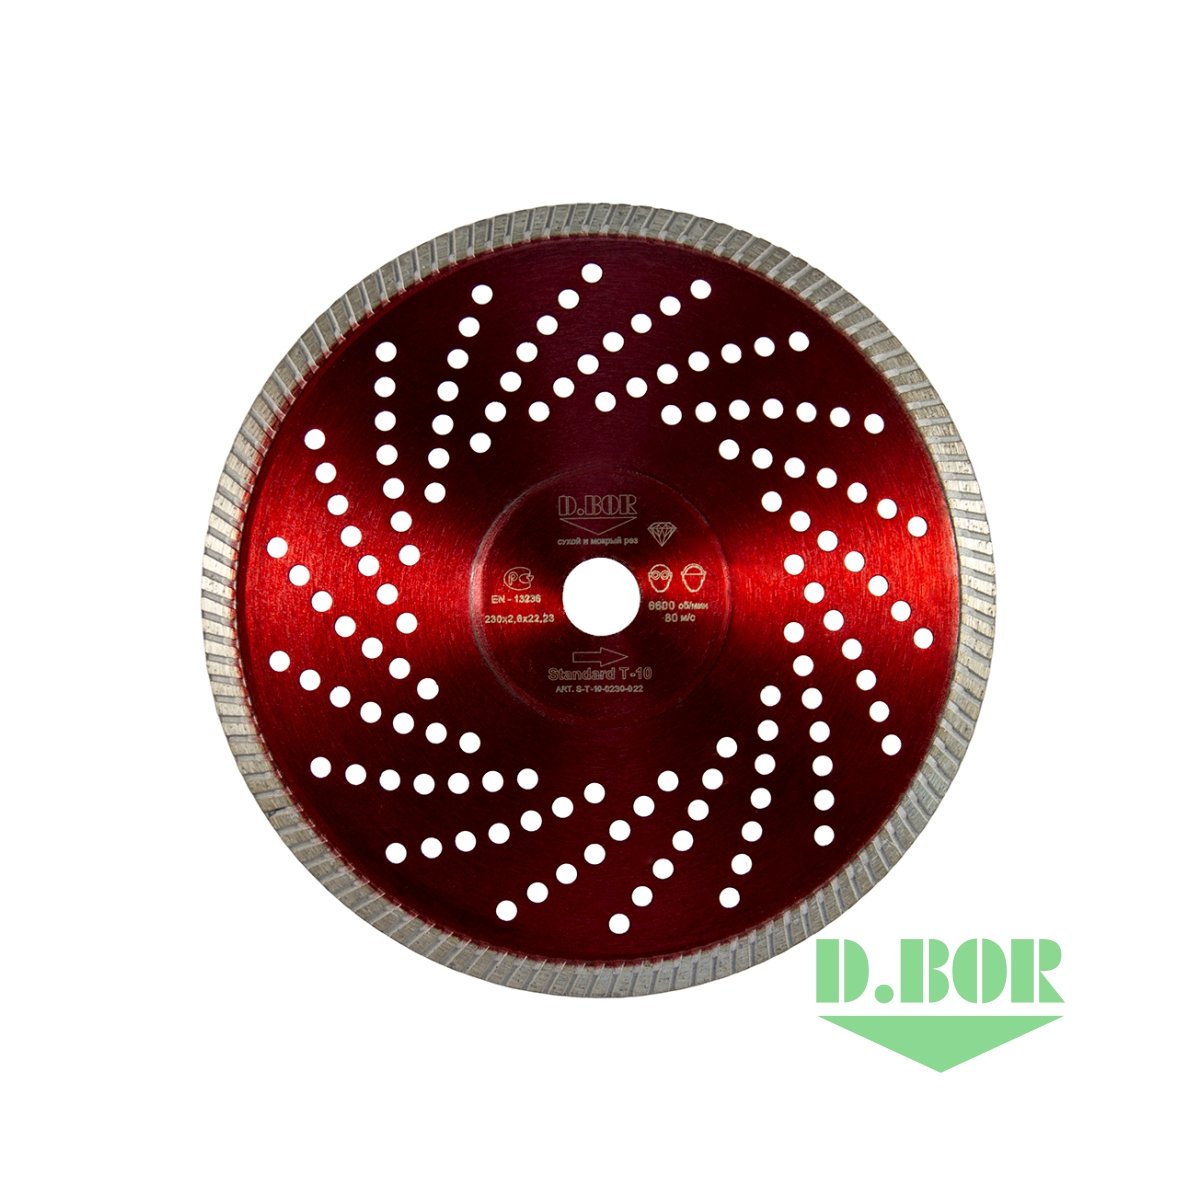 Алмазный диск Standard T-10, 115x2,0x22,23 (арт. S-T-10-0115-022) "D.BOR"